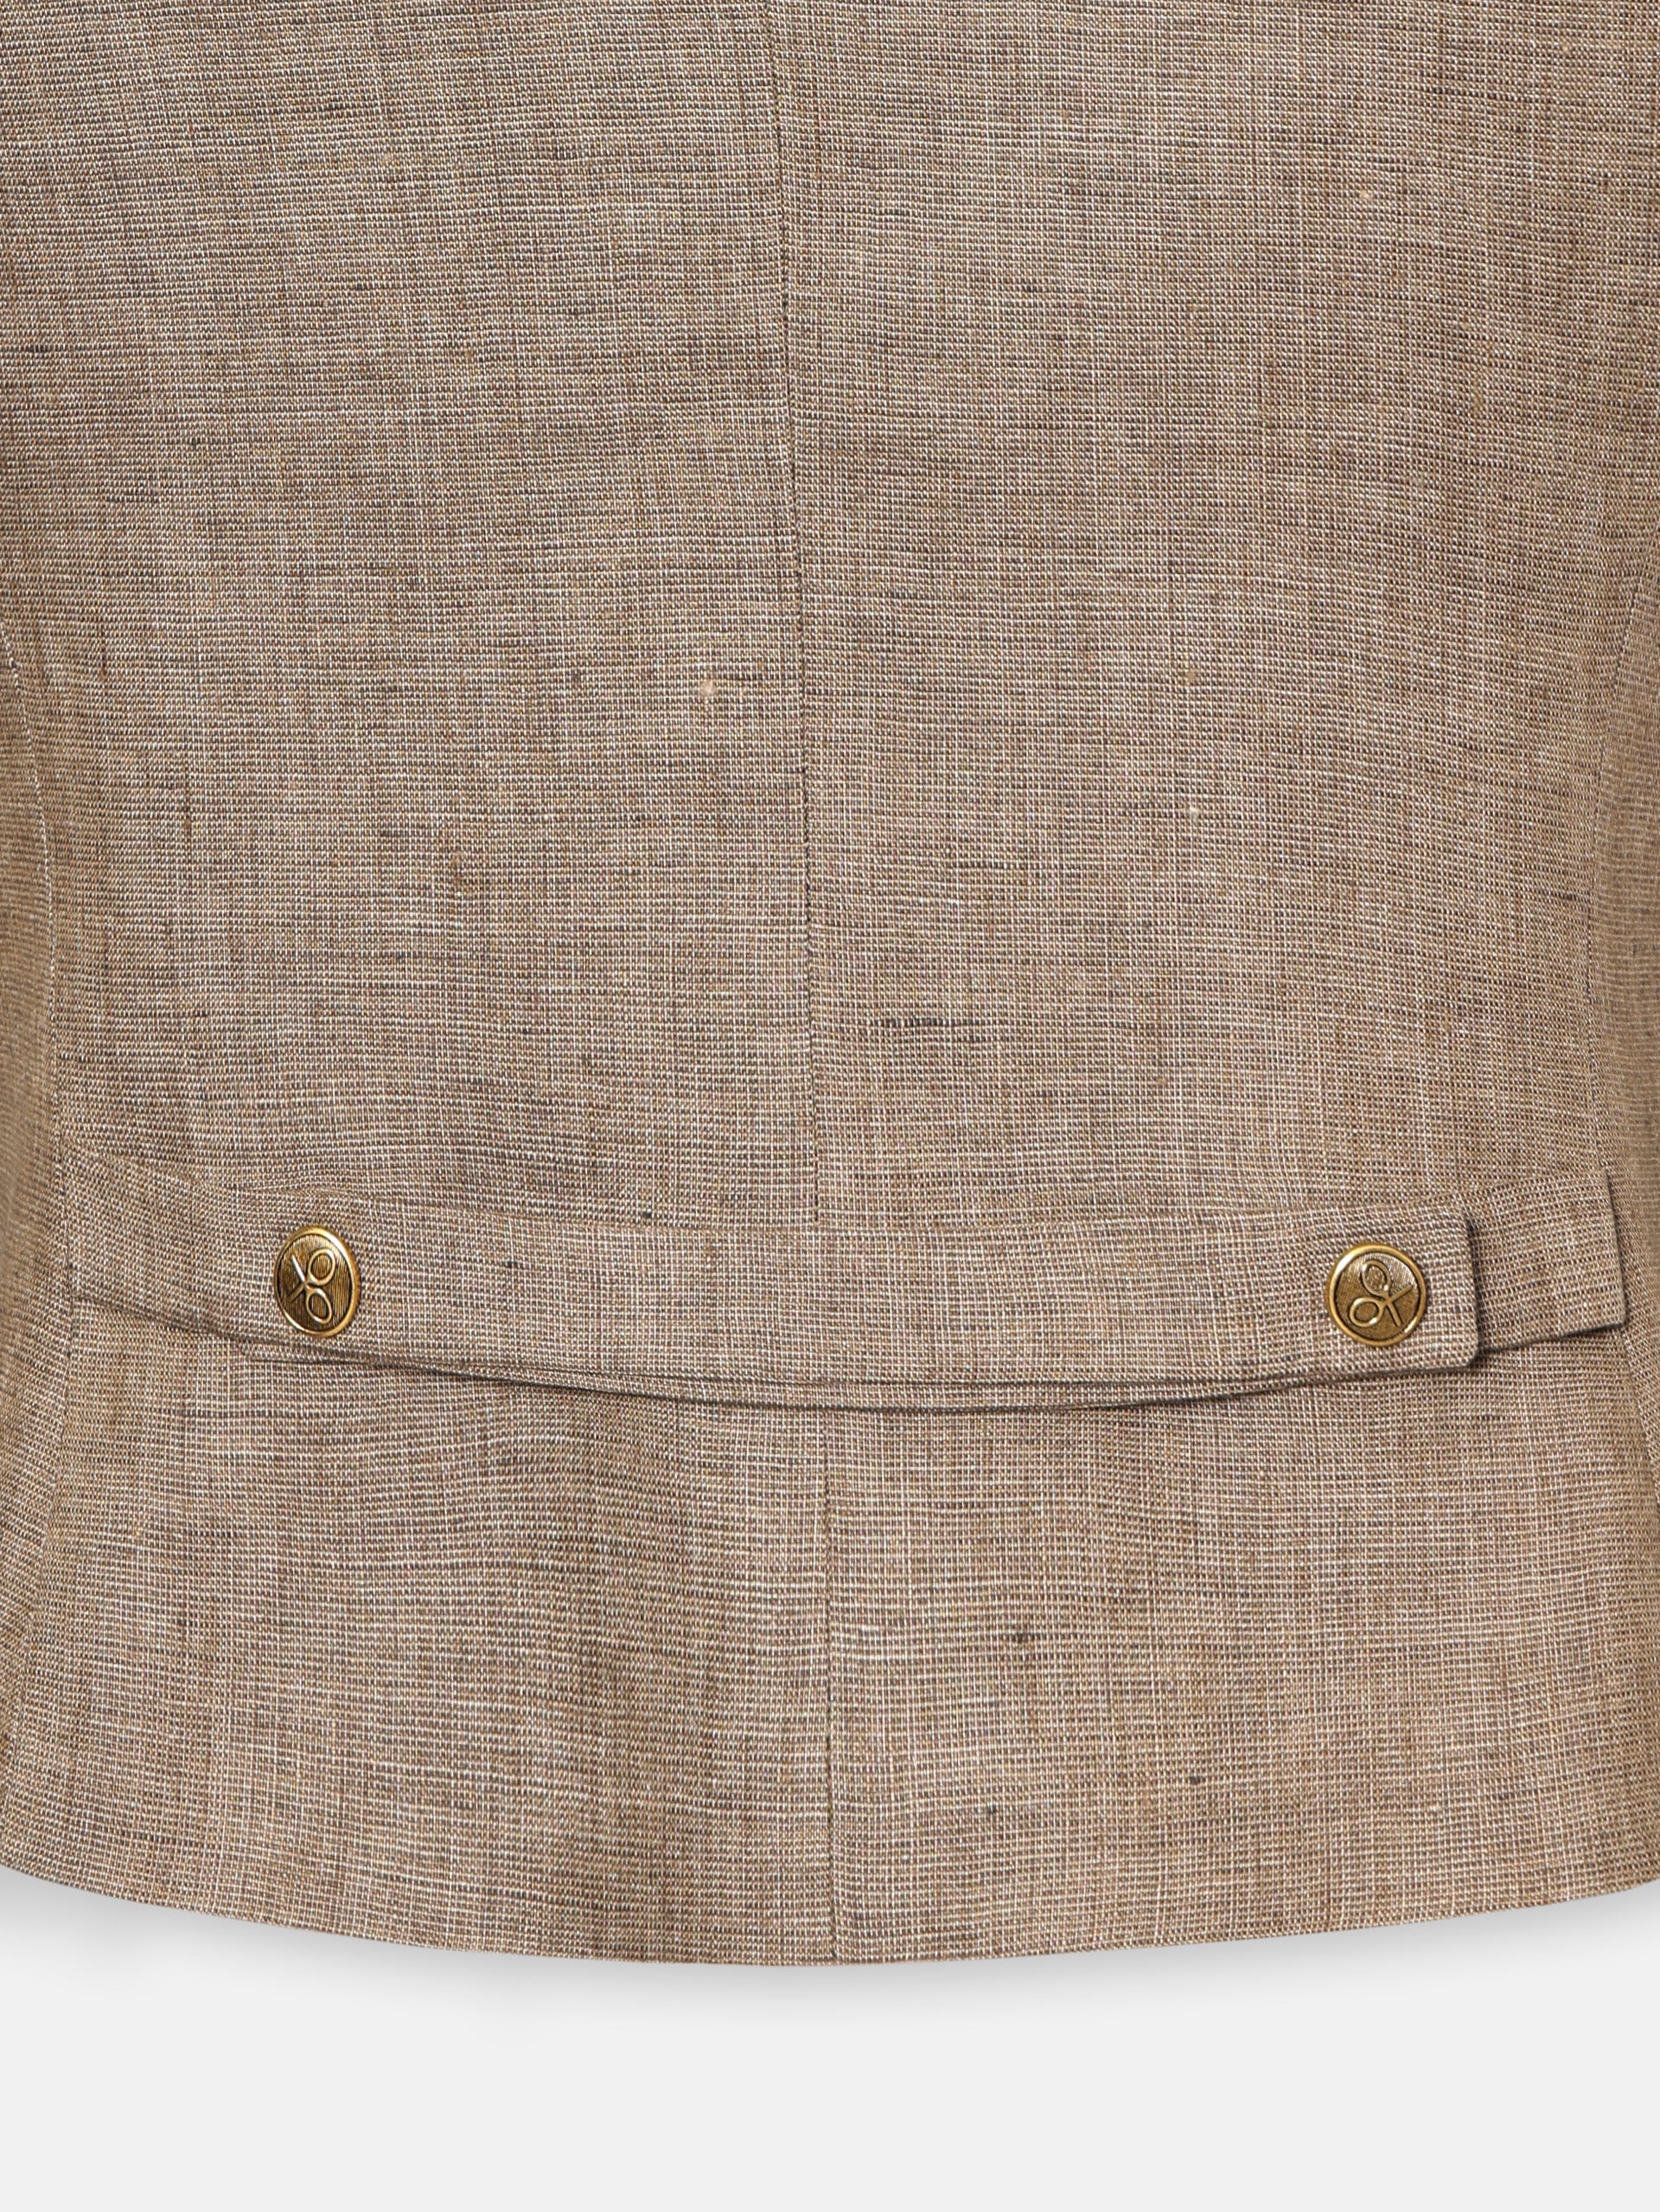 Women's unique medium beige linen vest